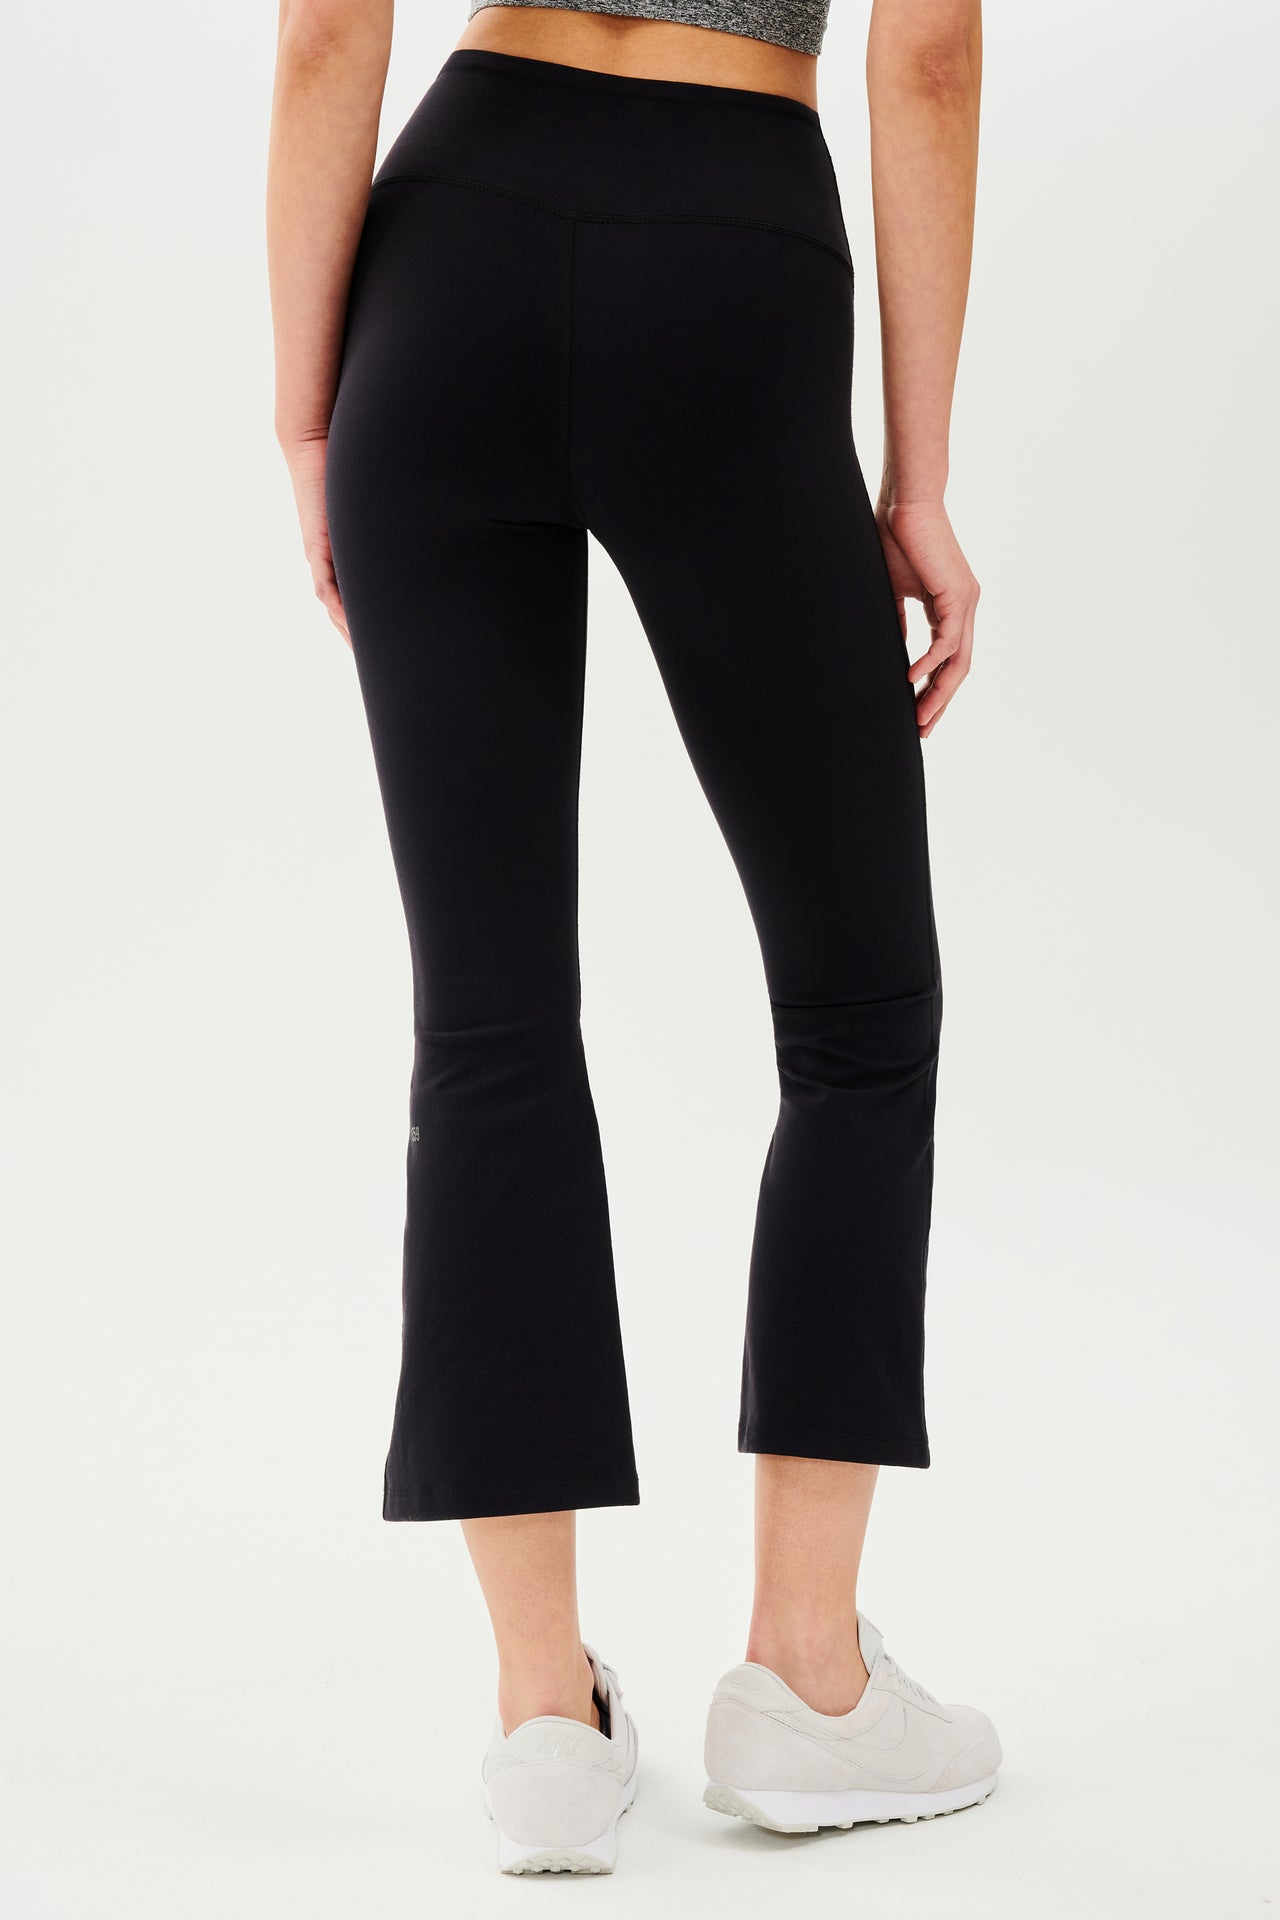 The back view of a woman wearing SPLITS59 Raquel High Waist Crop - Black leggings.